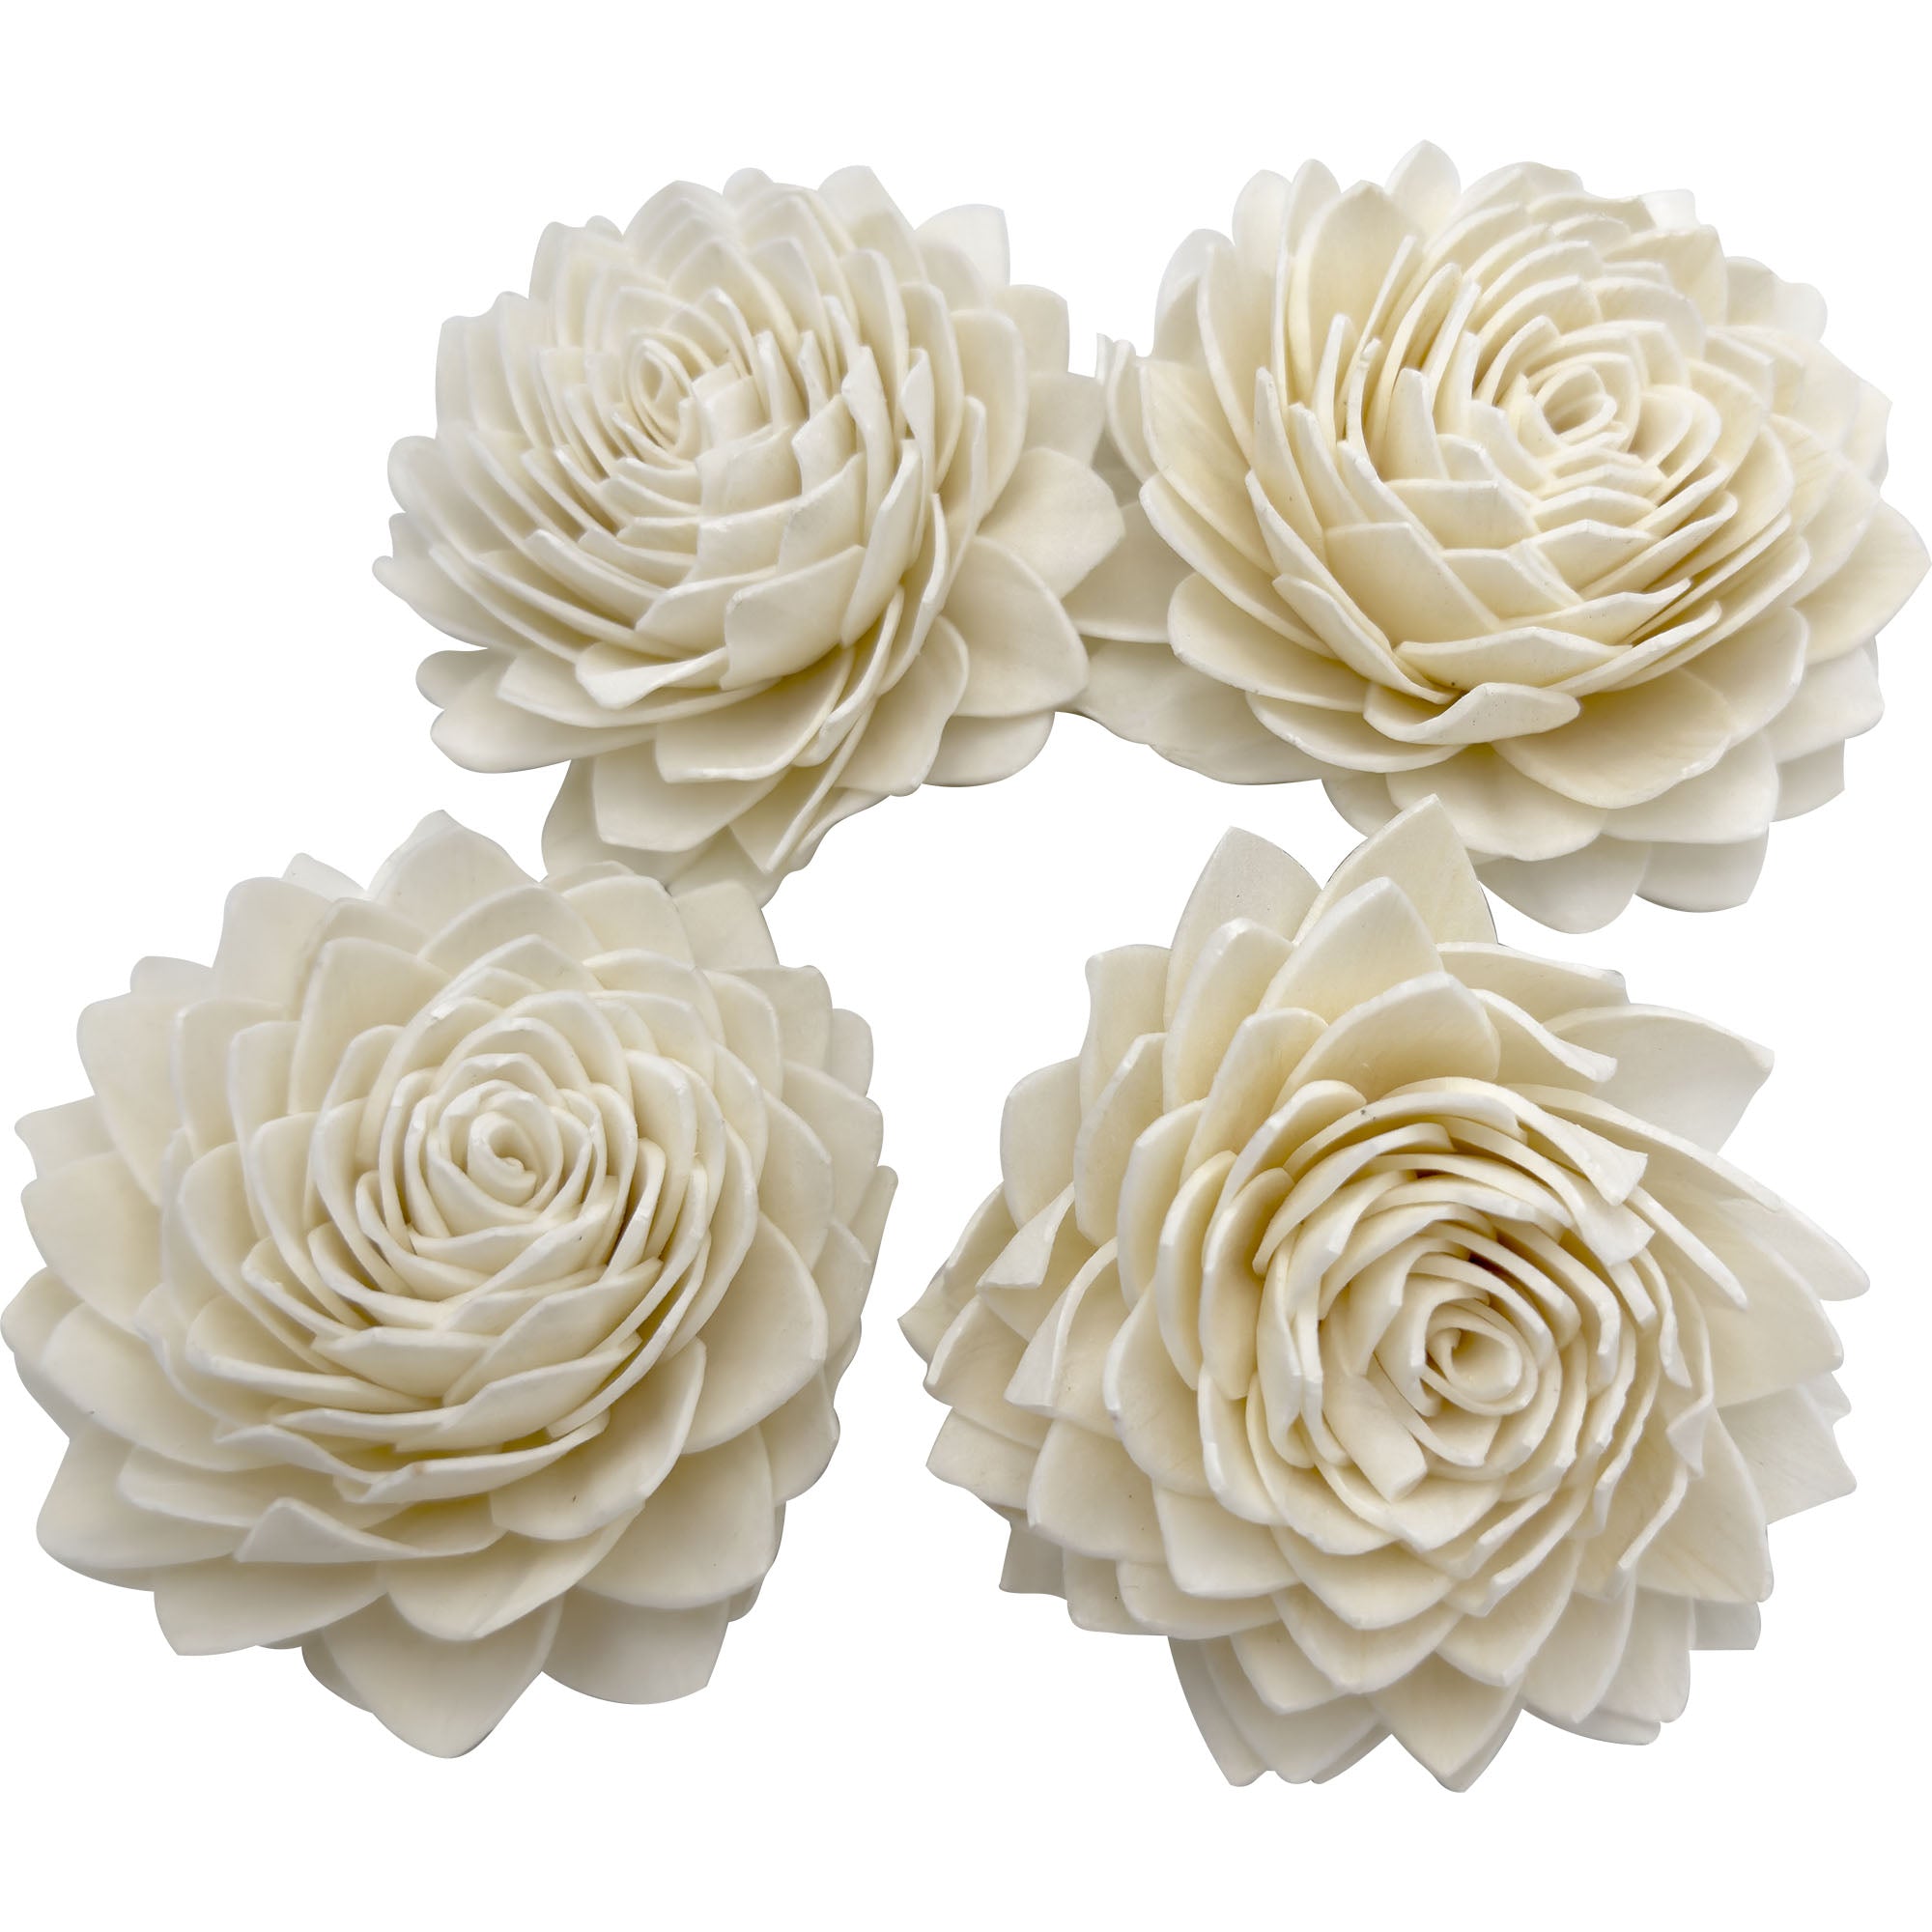 Sola Wood Flowers -Decorative Floral Foam Blocks, Size: 8